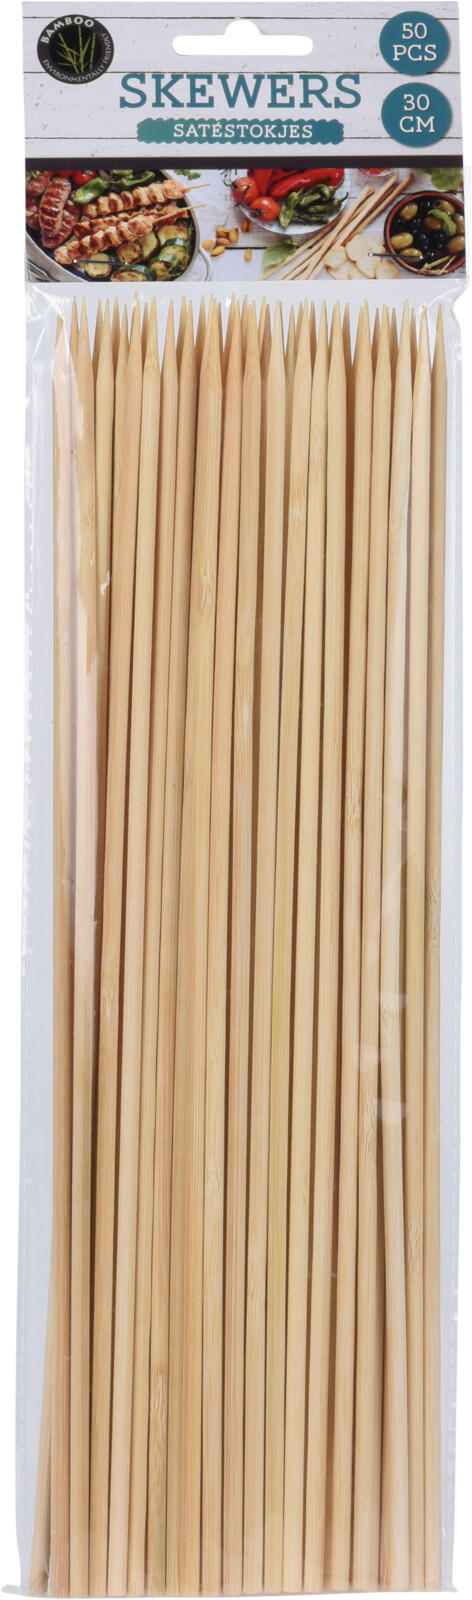 špejle bambus 30cmx4mm (50ks) 0.14 Kg MAXMIX Sklad14 386246 192